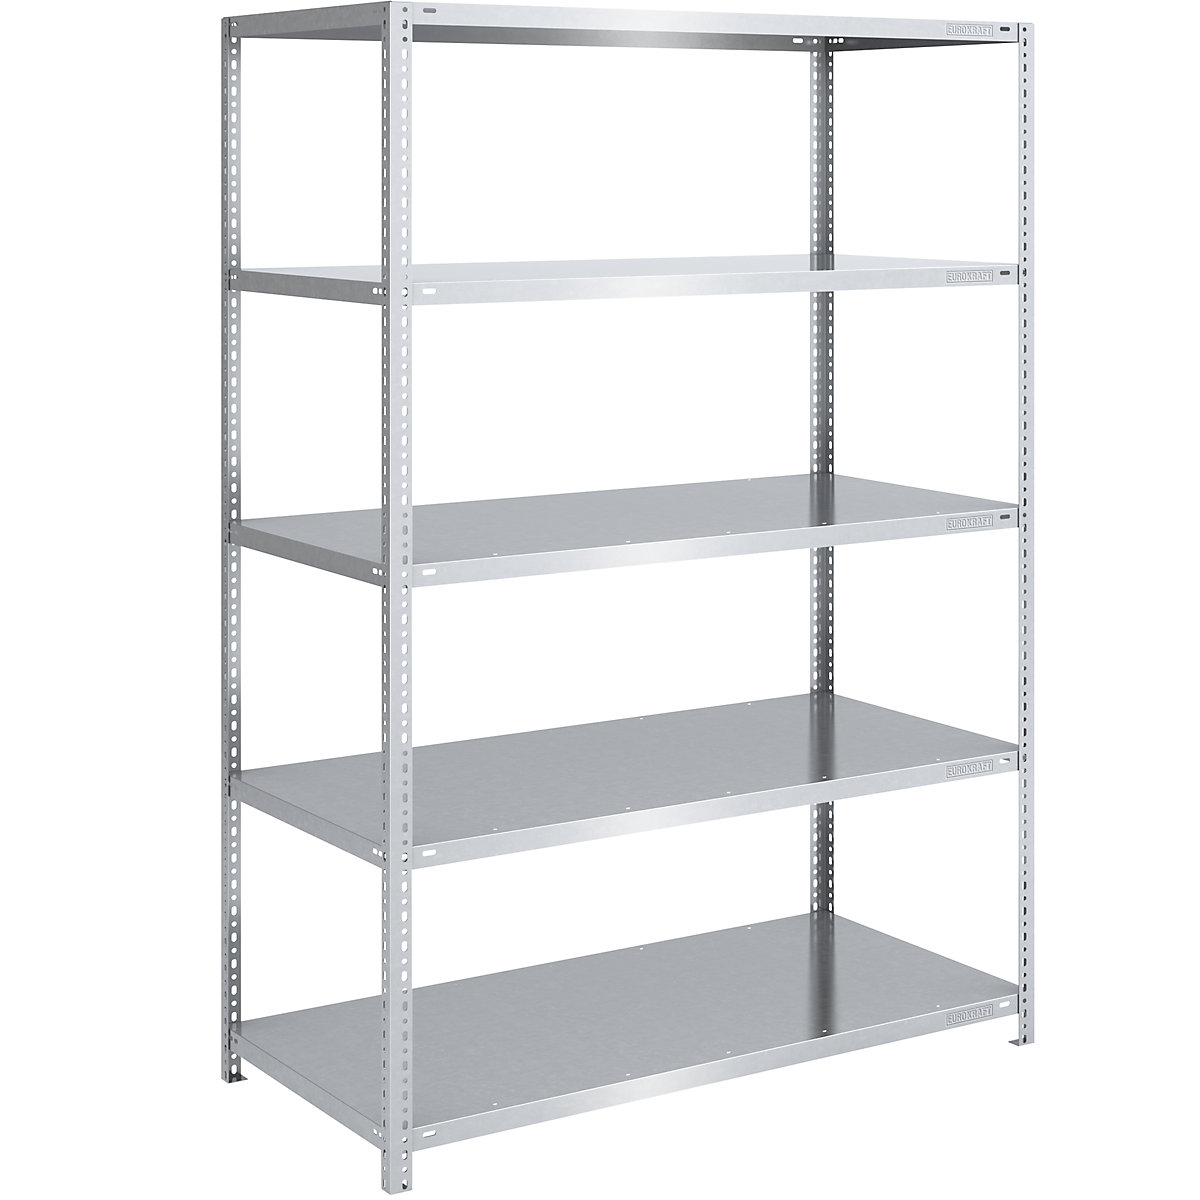 Bolt-together shelf unit, light duty, zinc plated – eurokraft pro, shelf unit height 2000 mm, shelf width 1300 mm, depth 800 mm, standard shelf unit-15